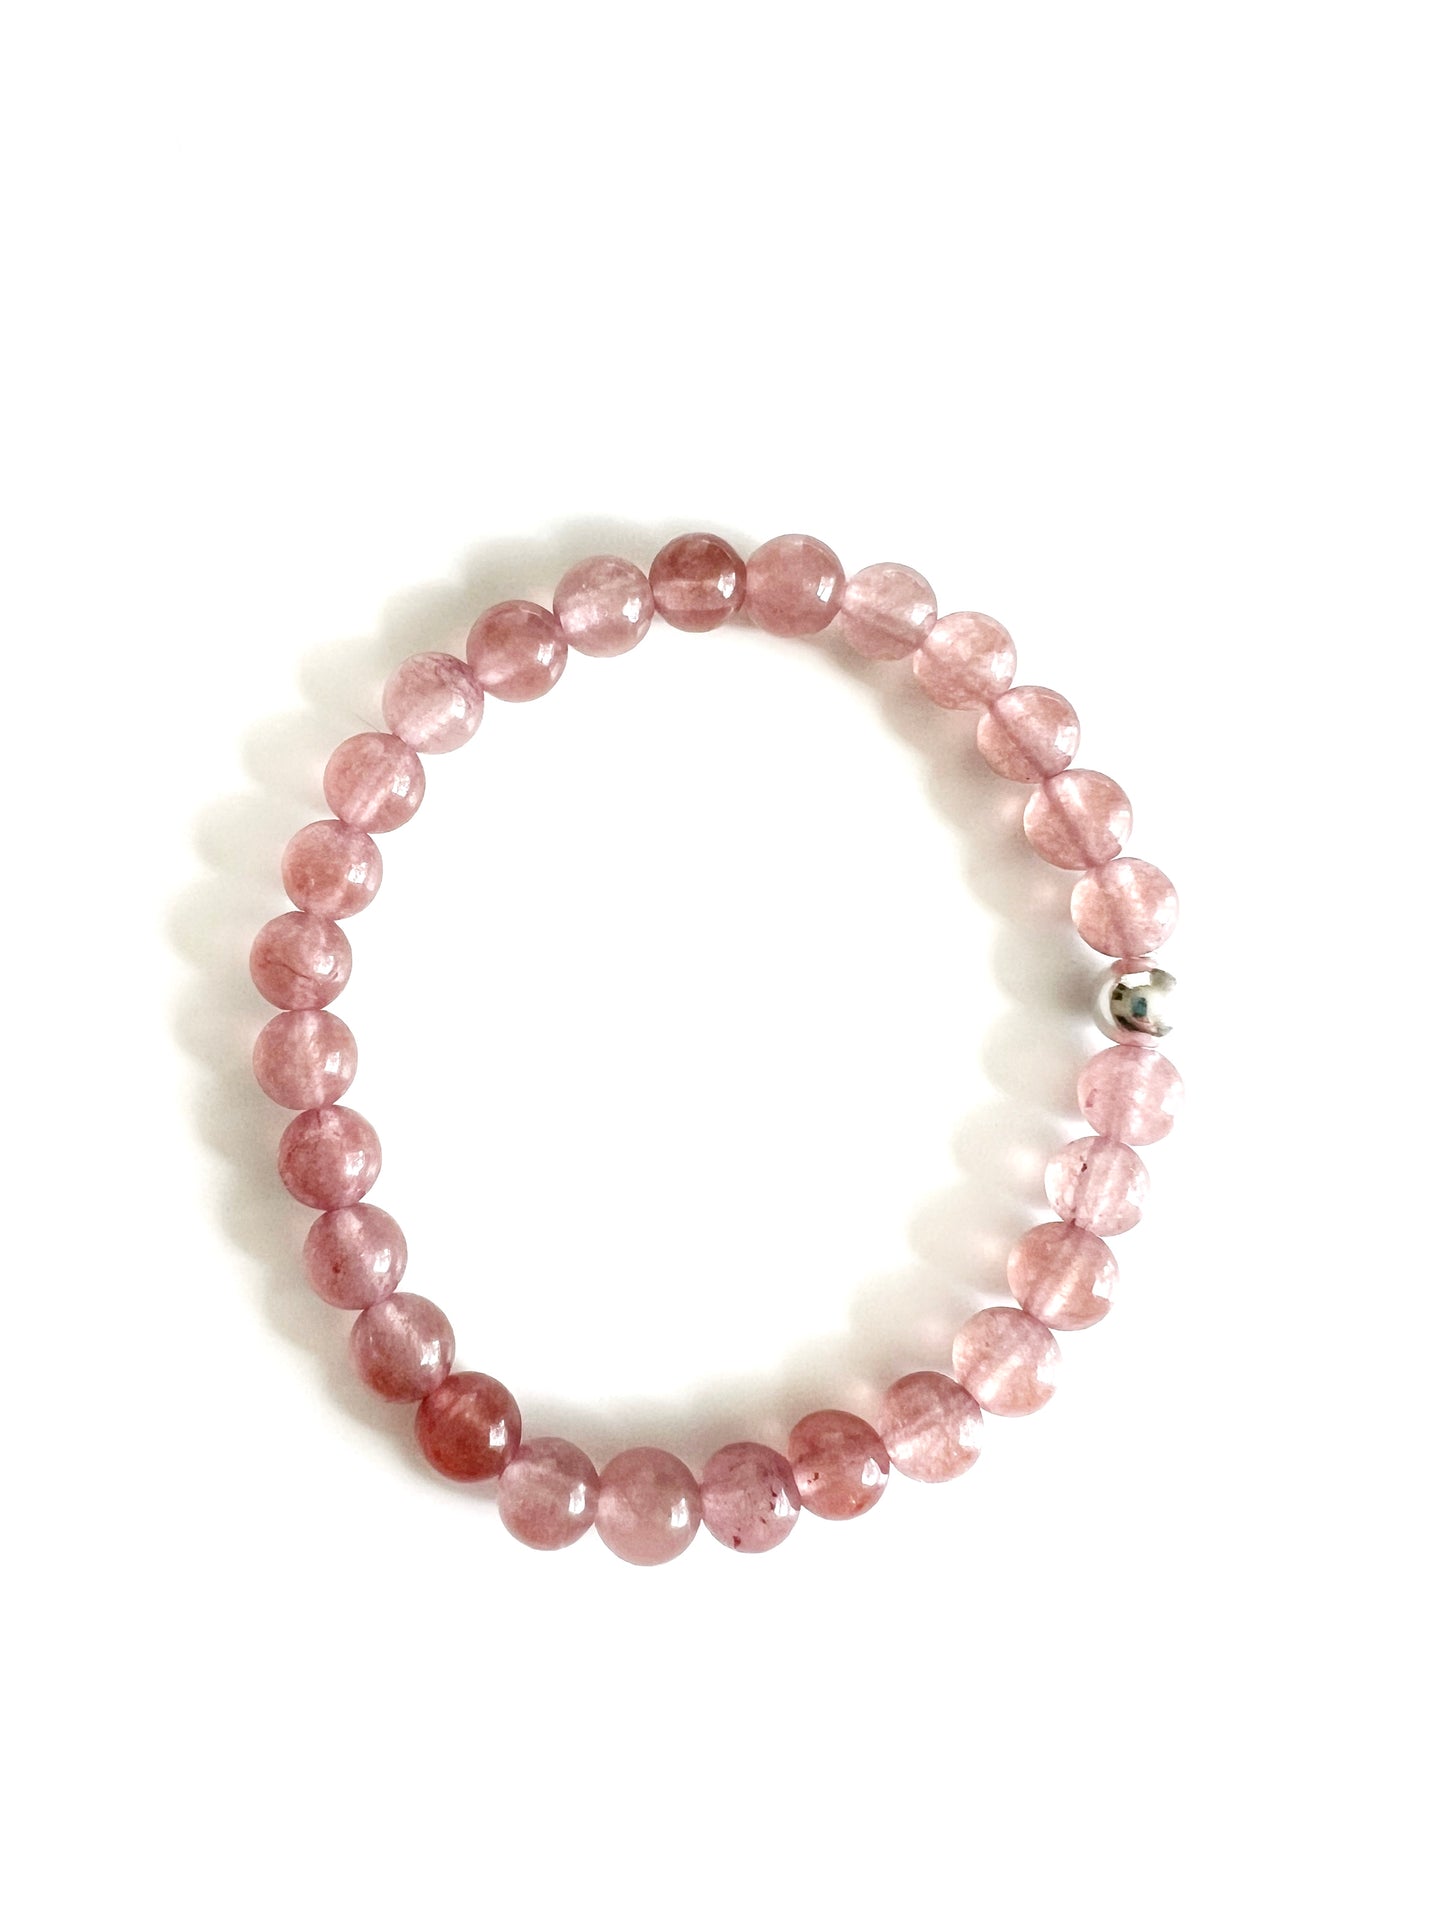 Strawberry Quartz stretch bracelet with one silver bead. Each bead is dark translucent pink